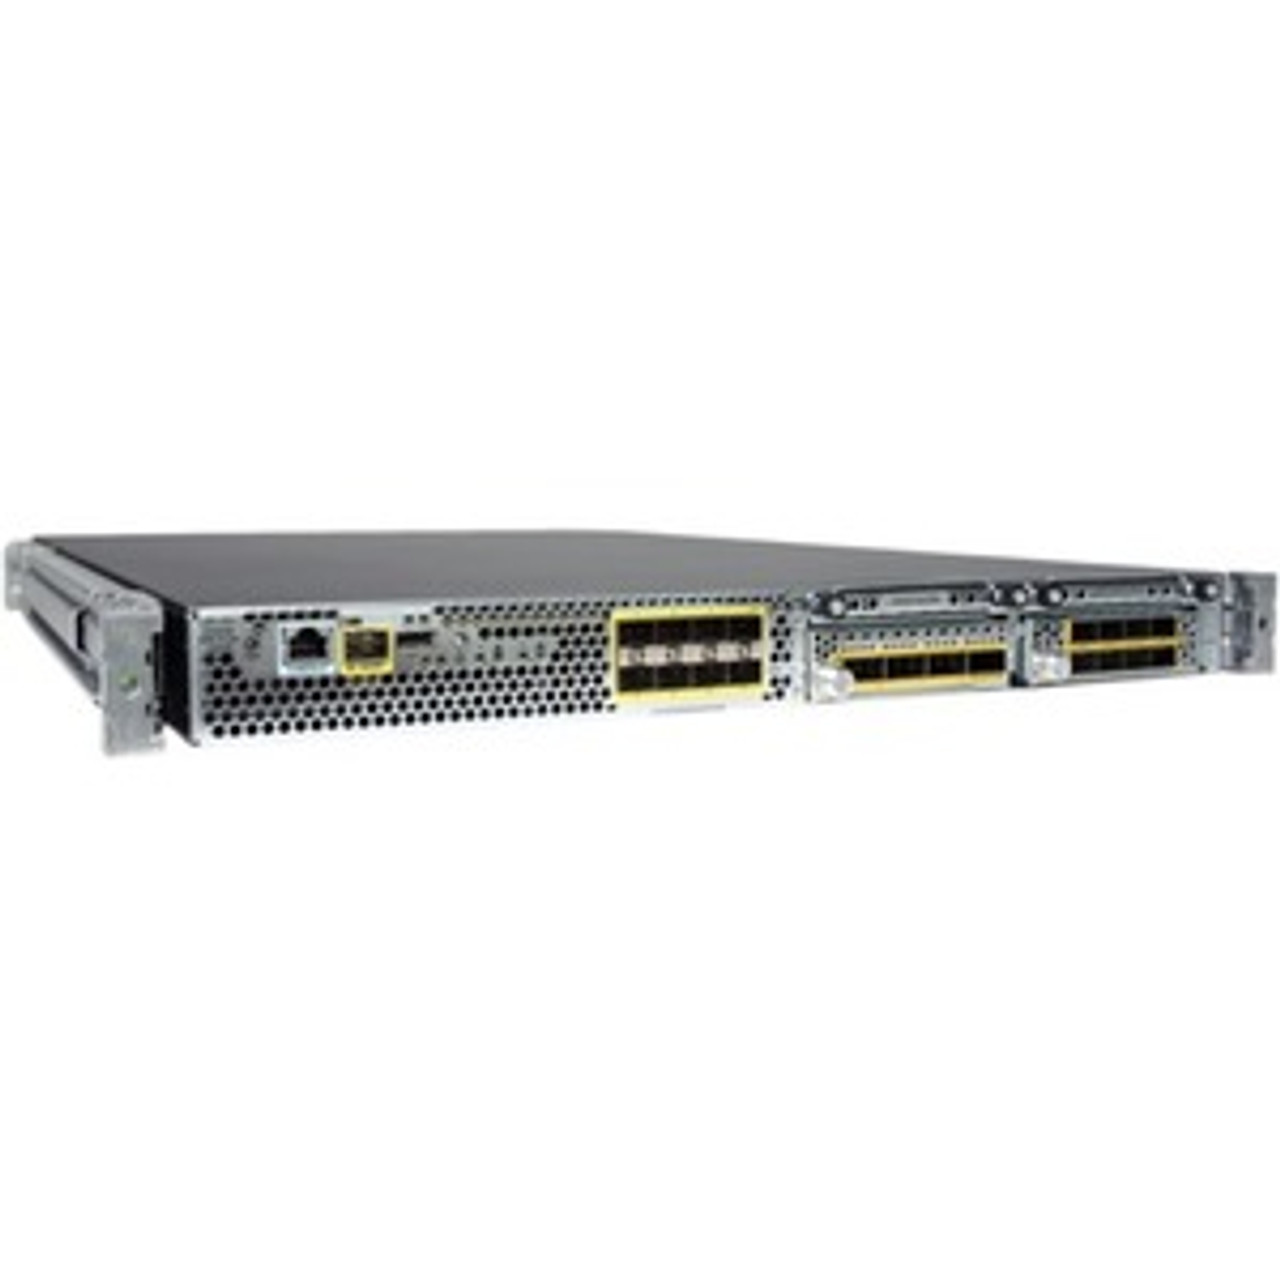 FPR4115-ASA-K9 Cisco Firepower 4115 Asa Appliance 1u 2 X Netmod Bays (Refurbished)